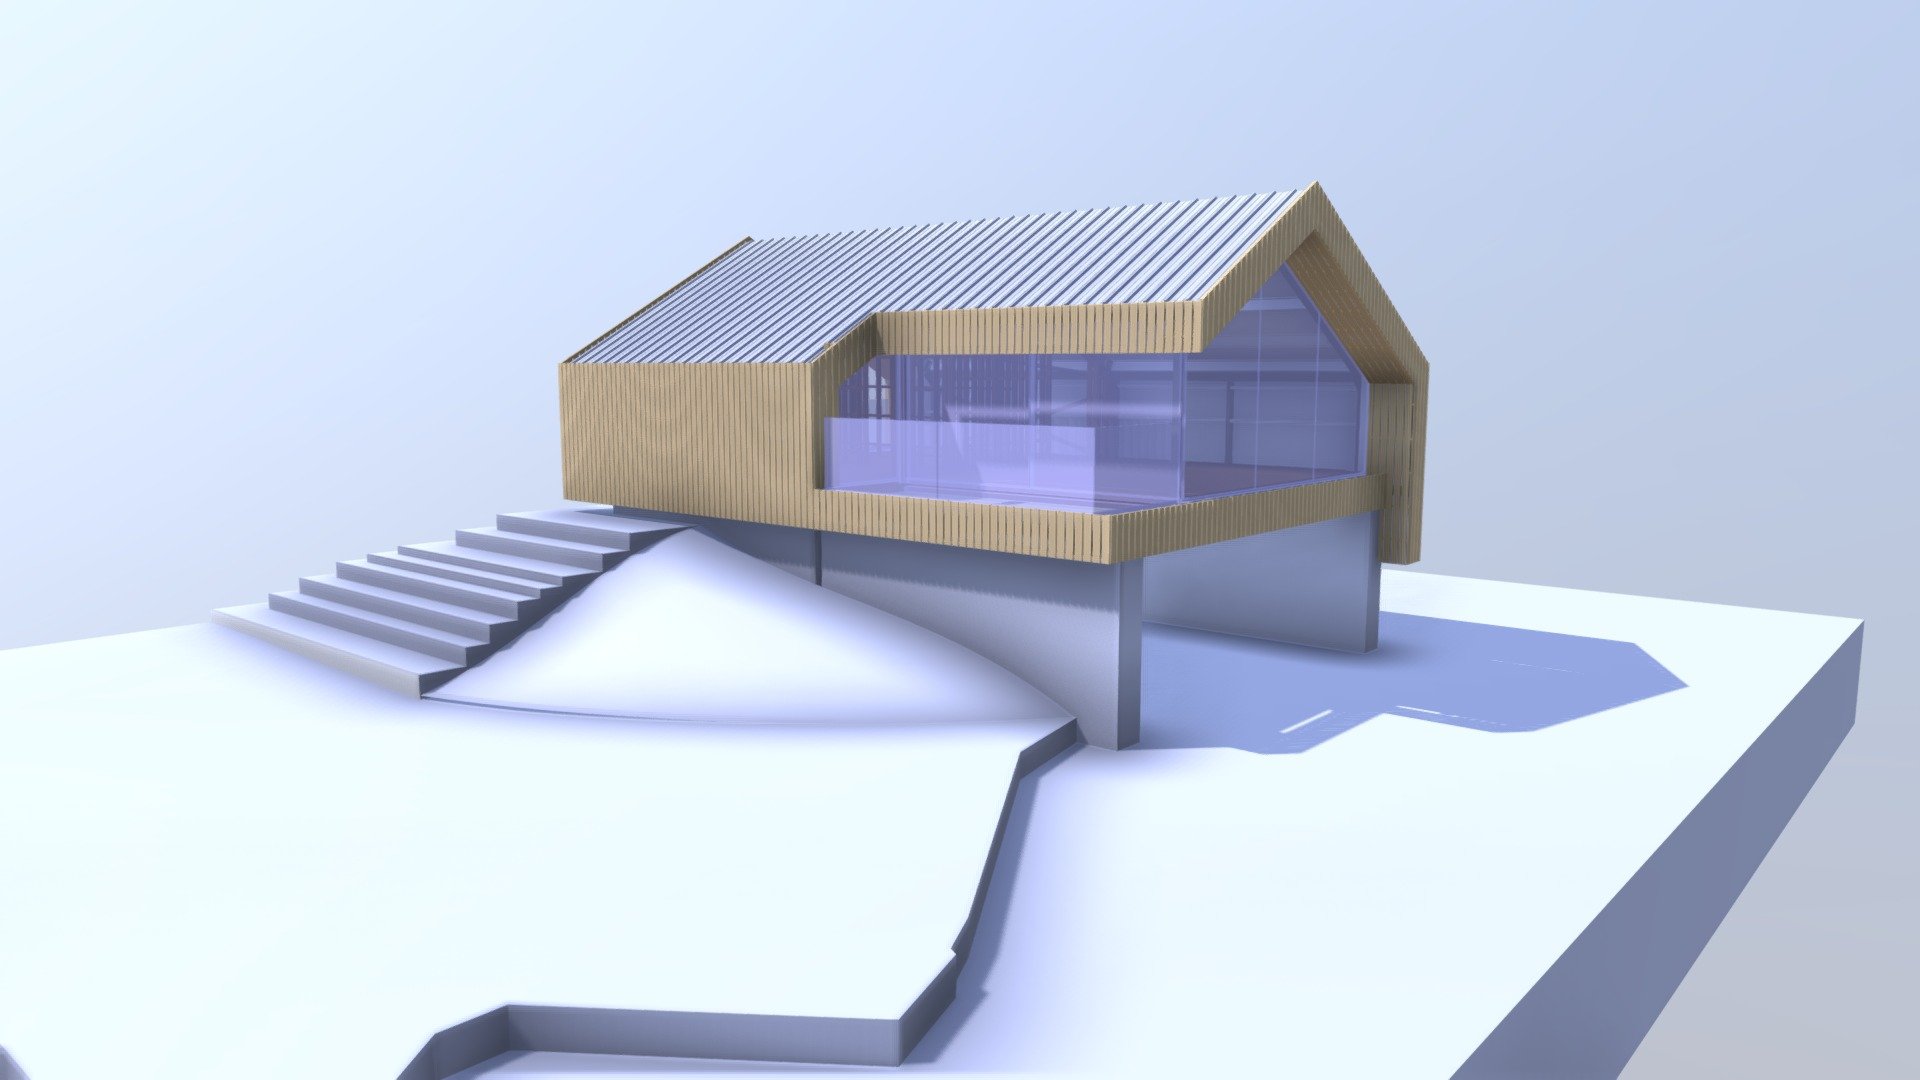 Boathouse with Skin - 3D model by phillip hawkins (@philliphawkins) 3d model